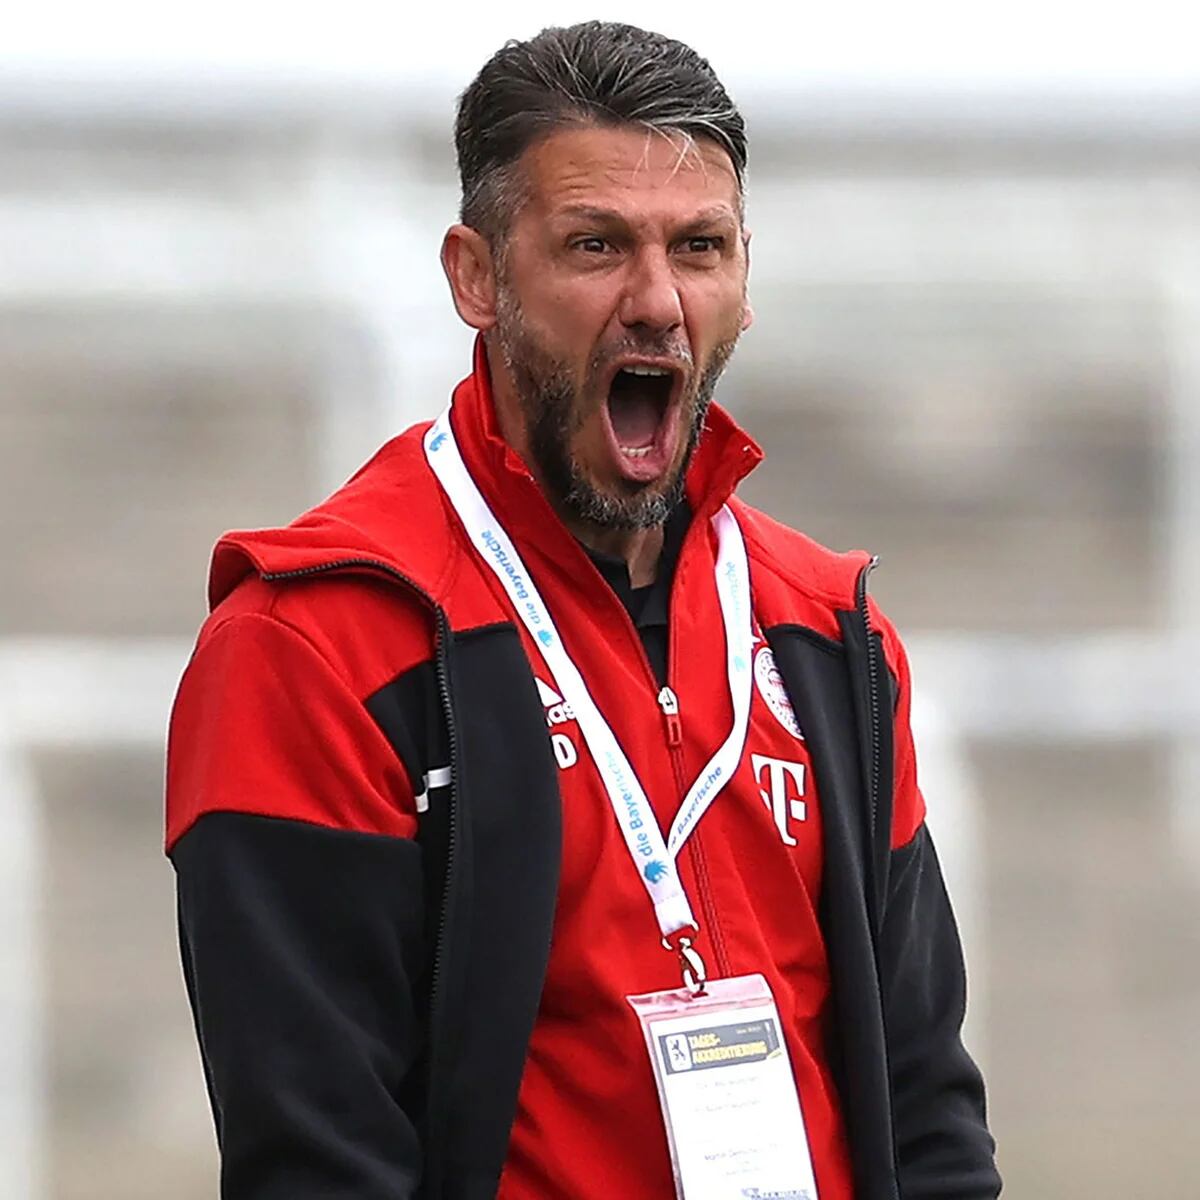 River Plate unveil Demichelis as new coach, replacing Gallardo